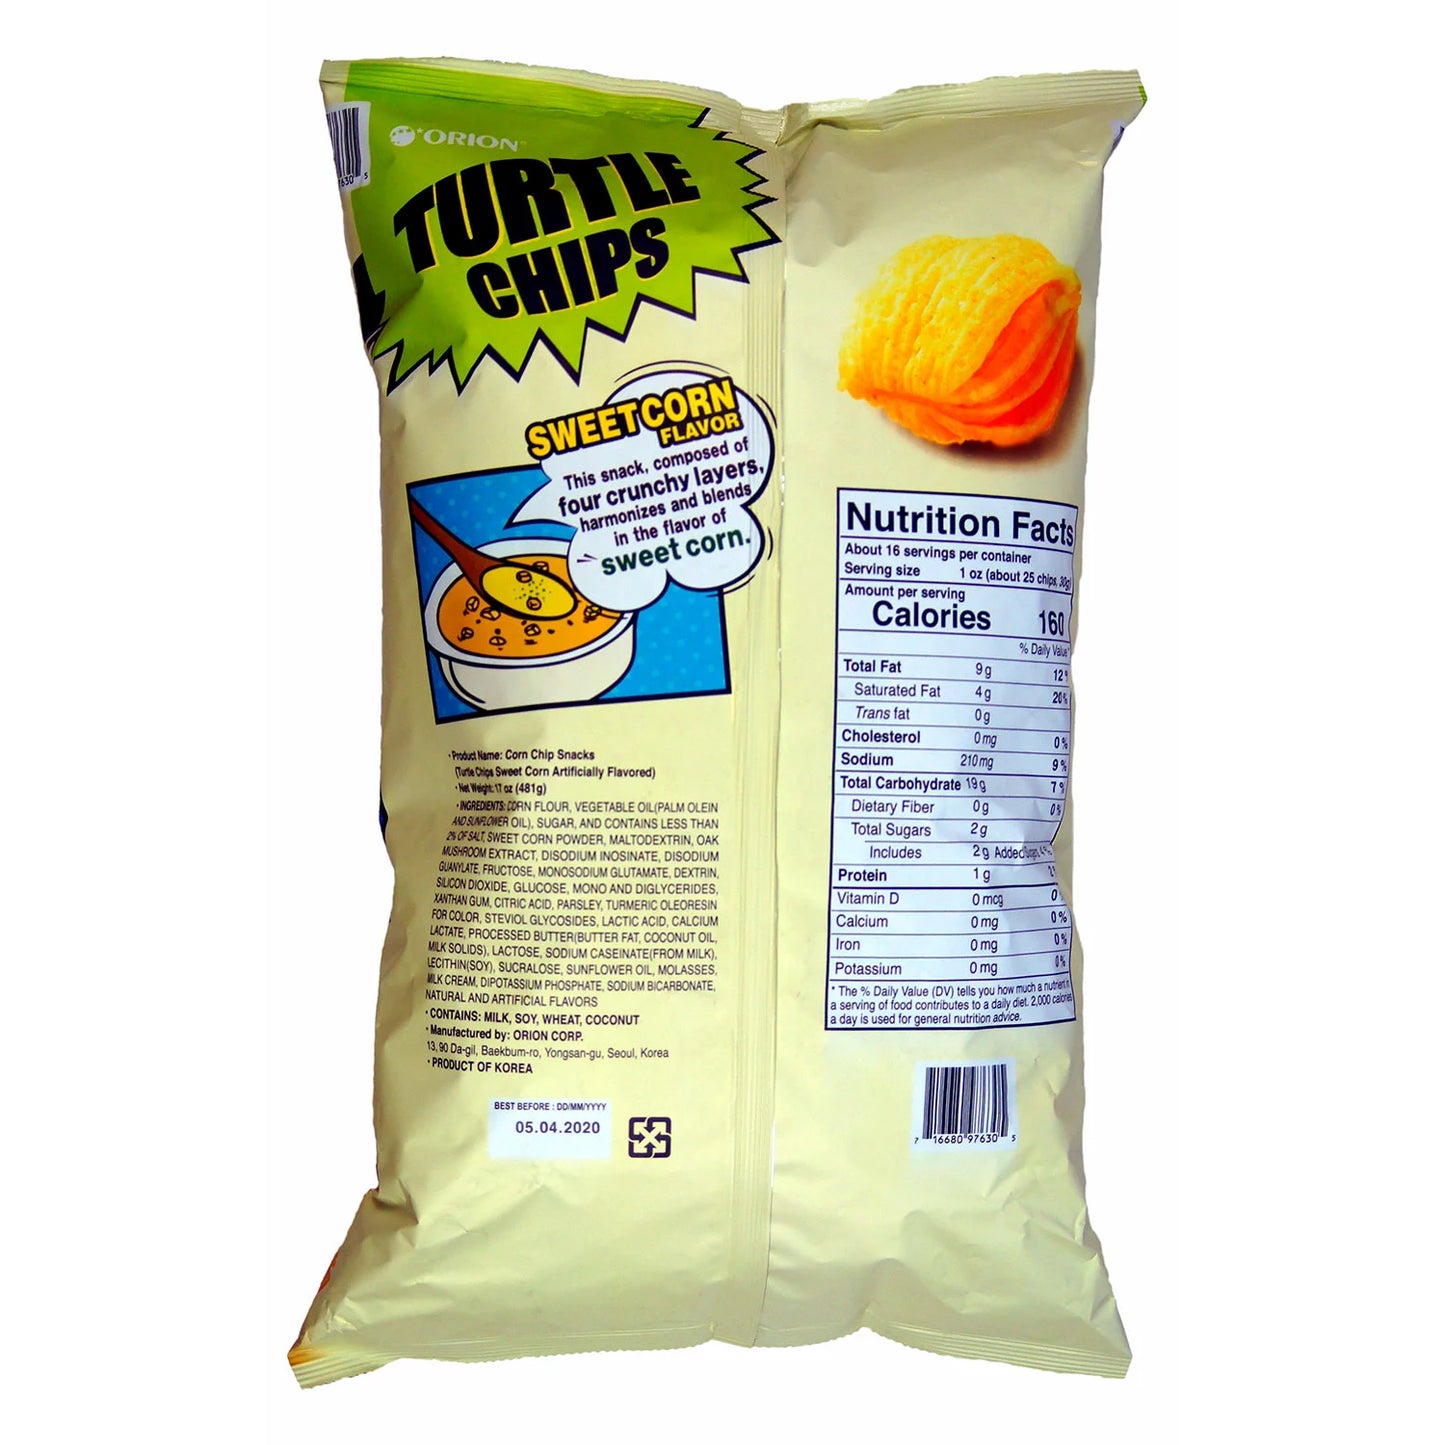 Orion Turtle Chips Sweet Corn (17 oz.)